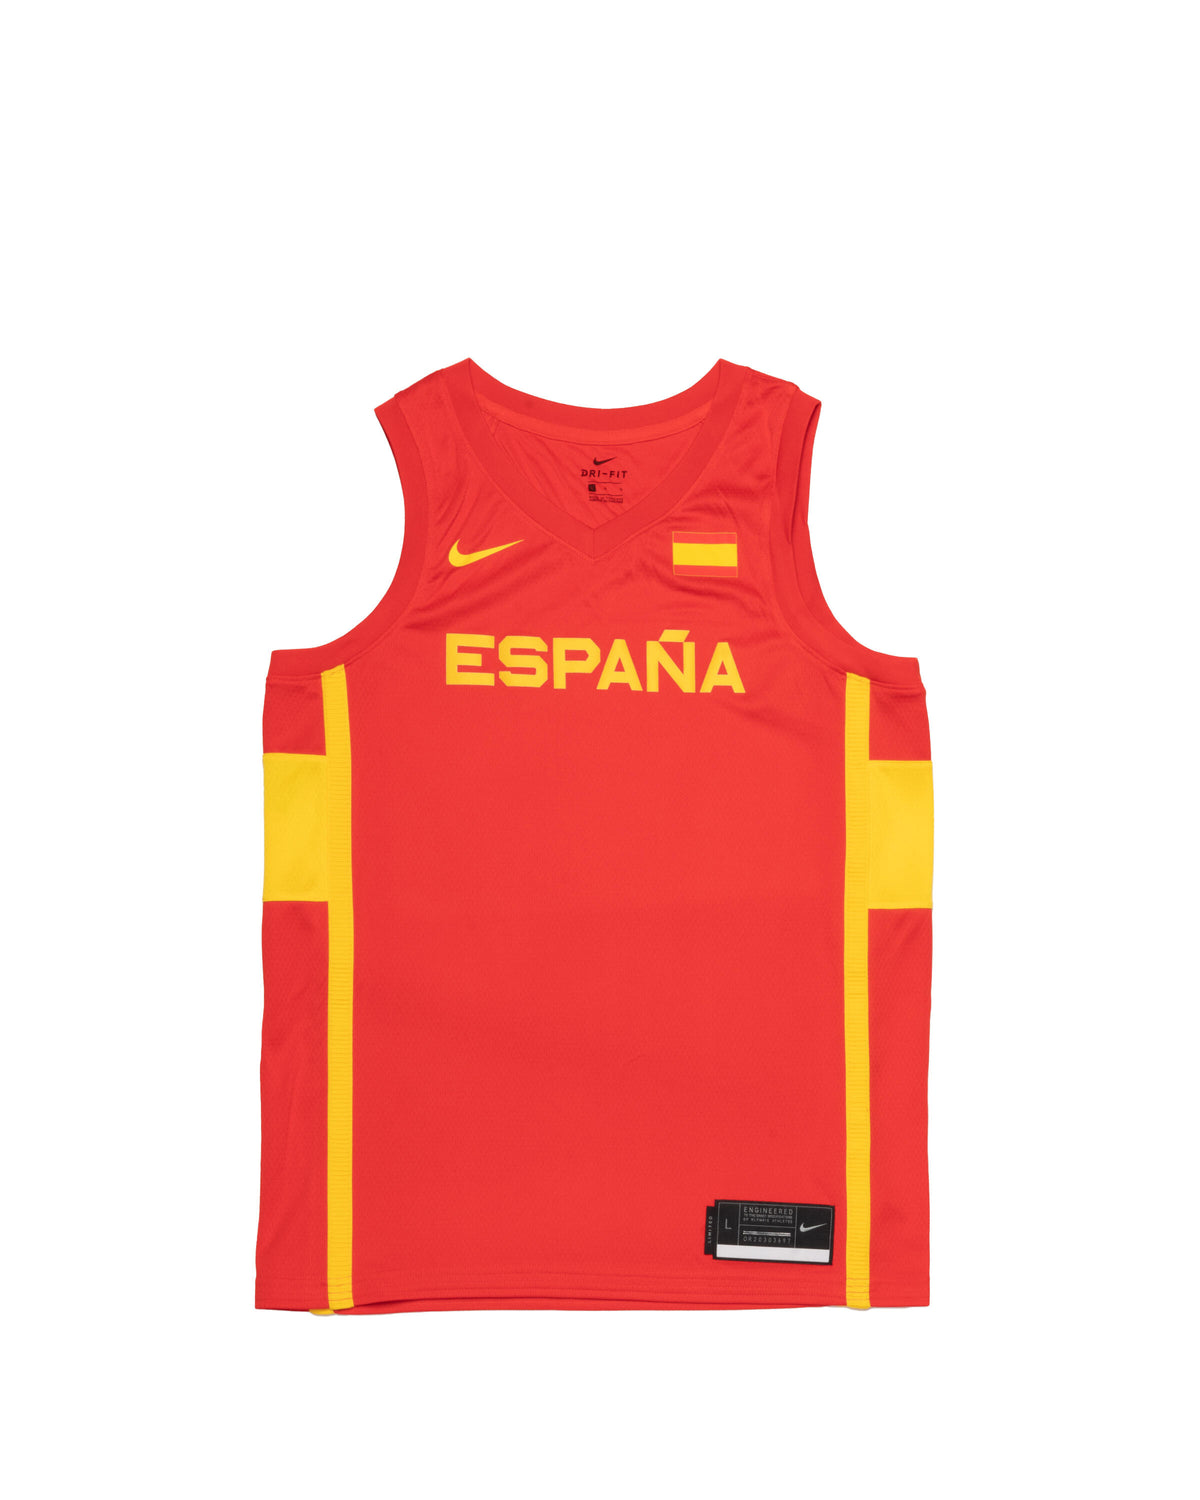 Nike Spain Basketball Jersey